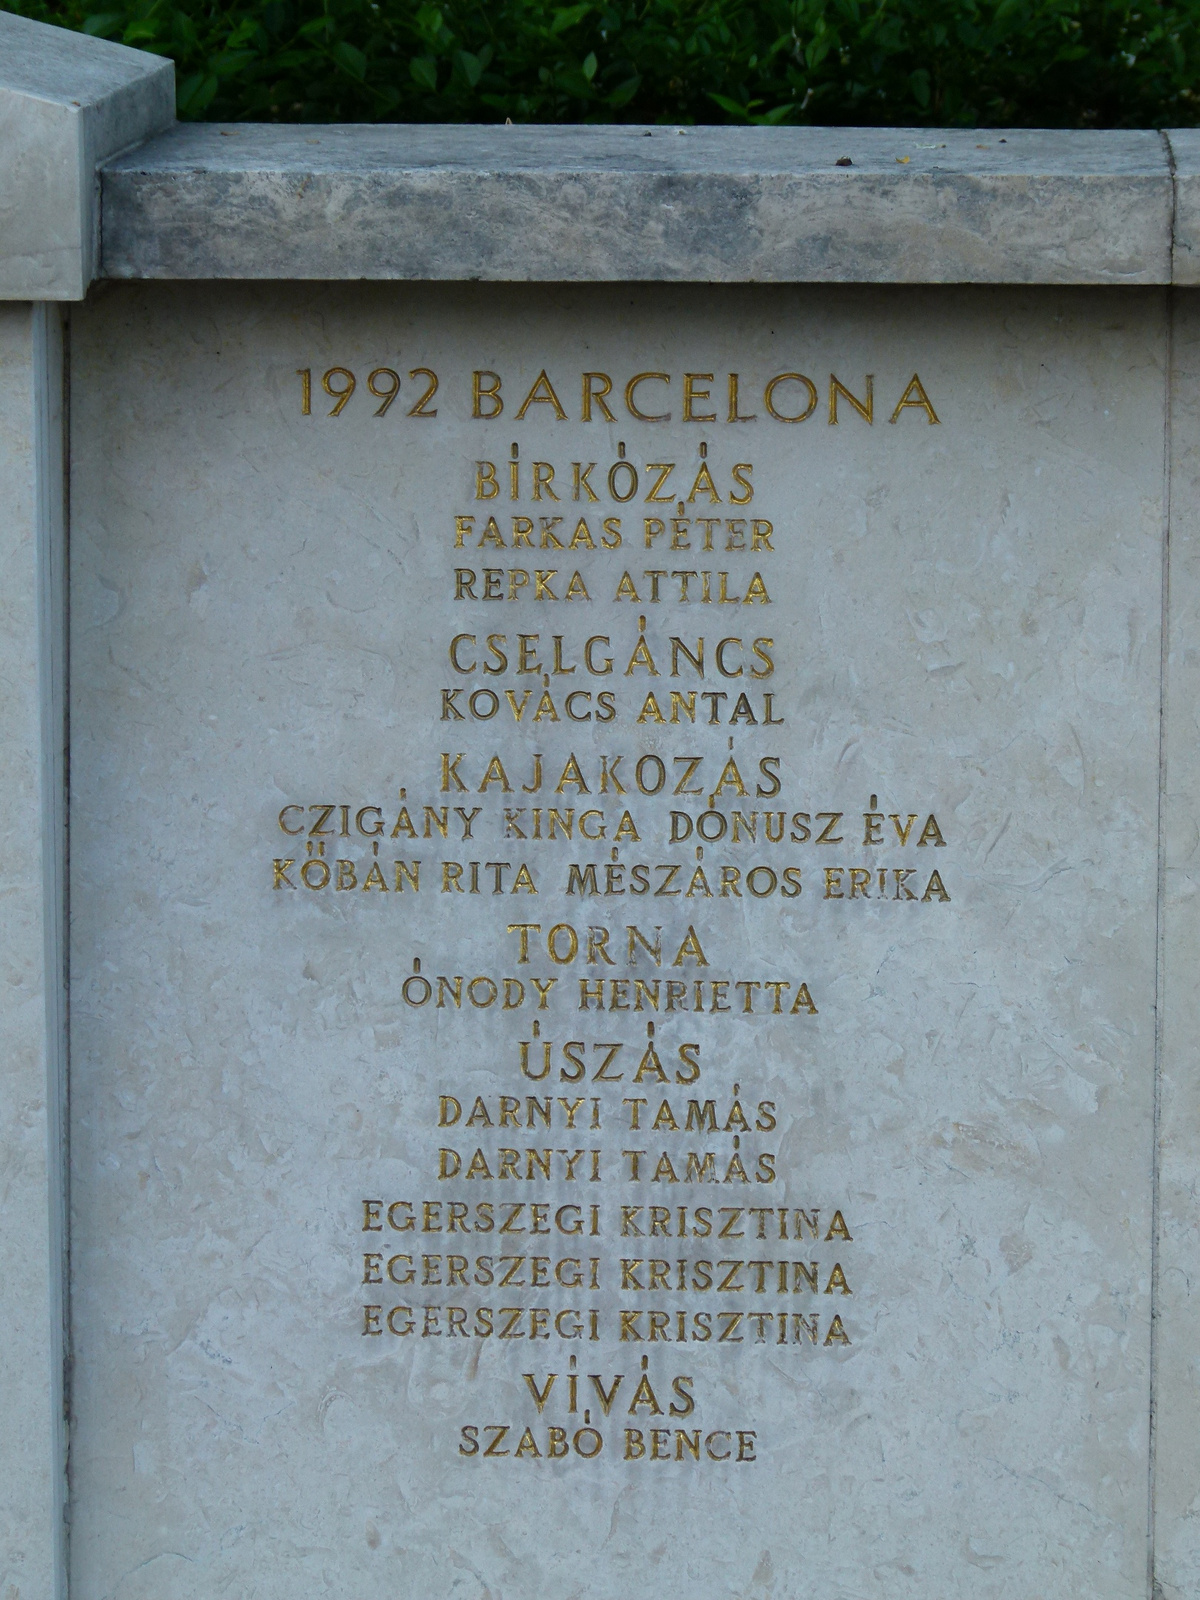 1992 Barcelona (P1140813)